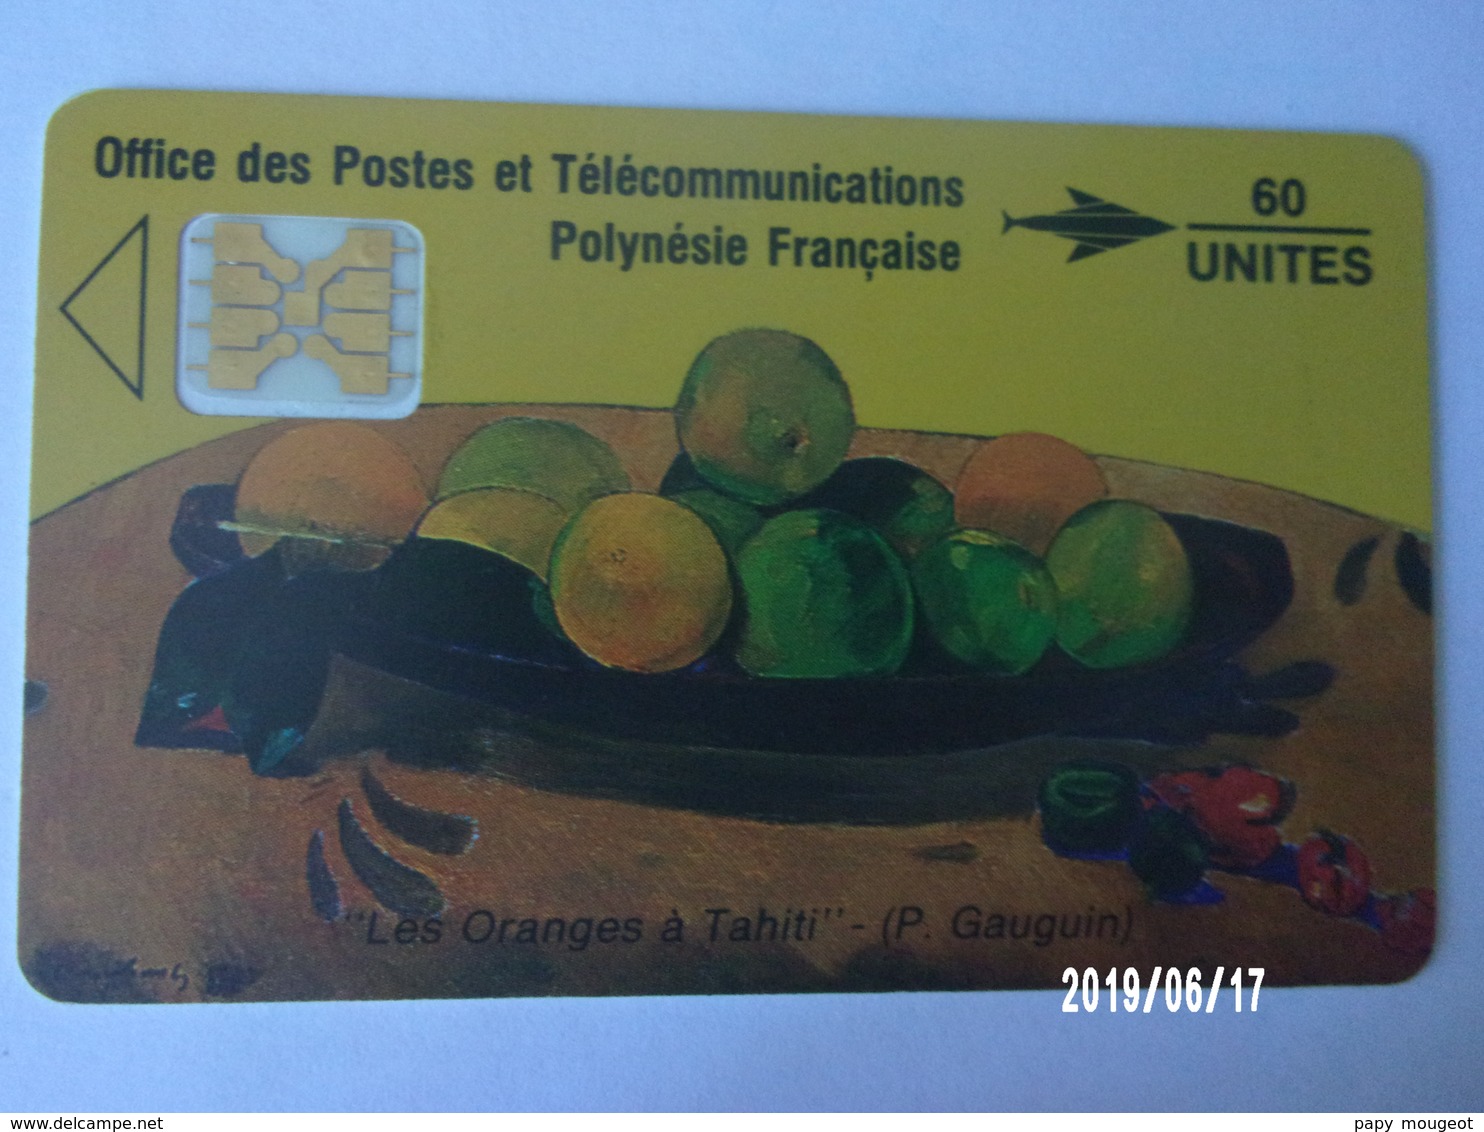 PF5 ? 60U 05/91 "Les Oranges à Tahiti" (P. Gauguin) - French Polynesia